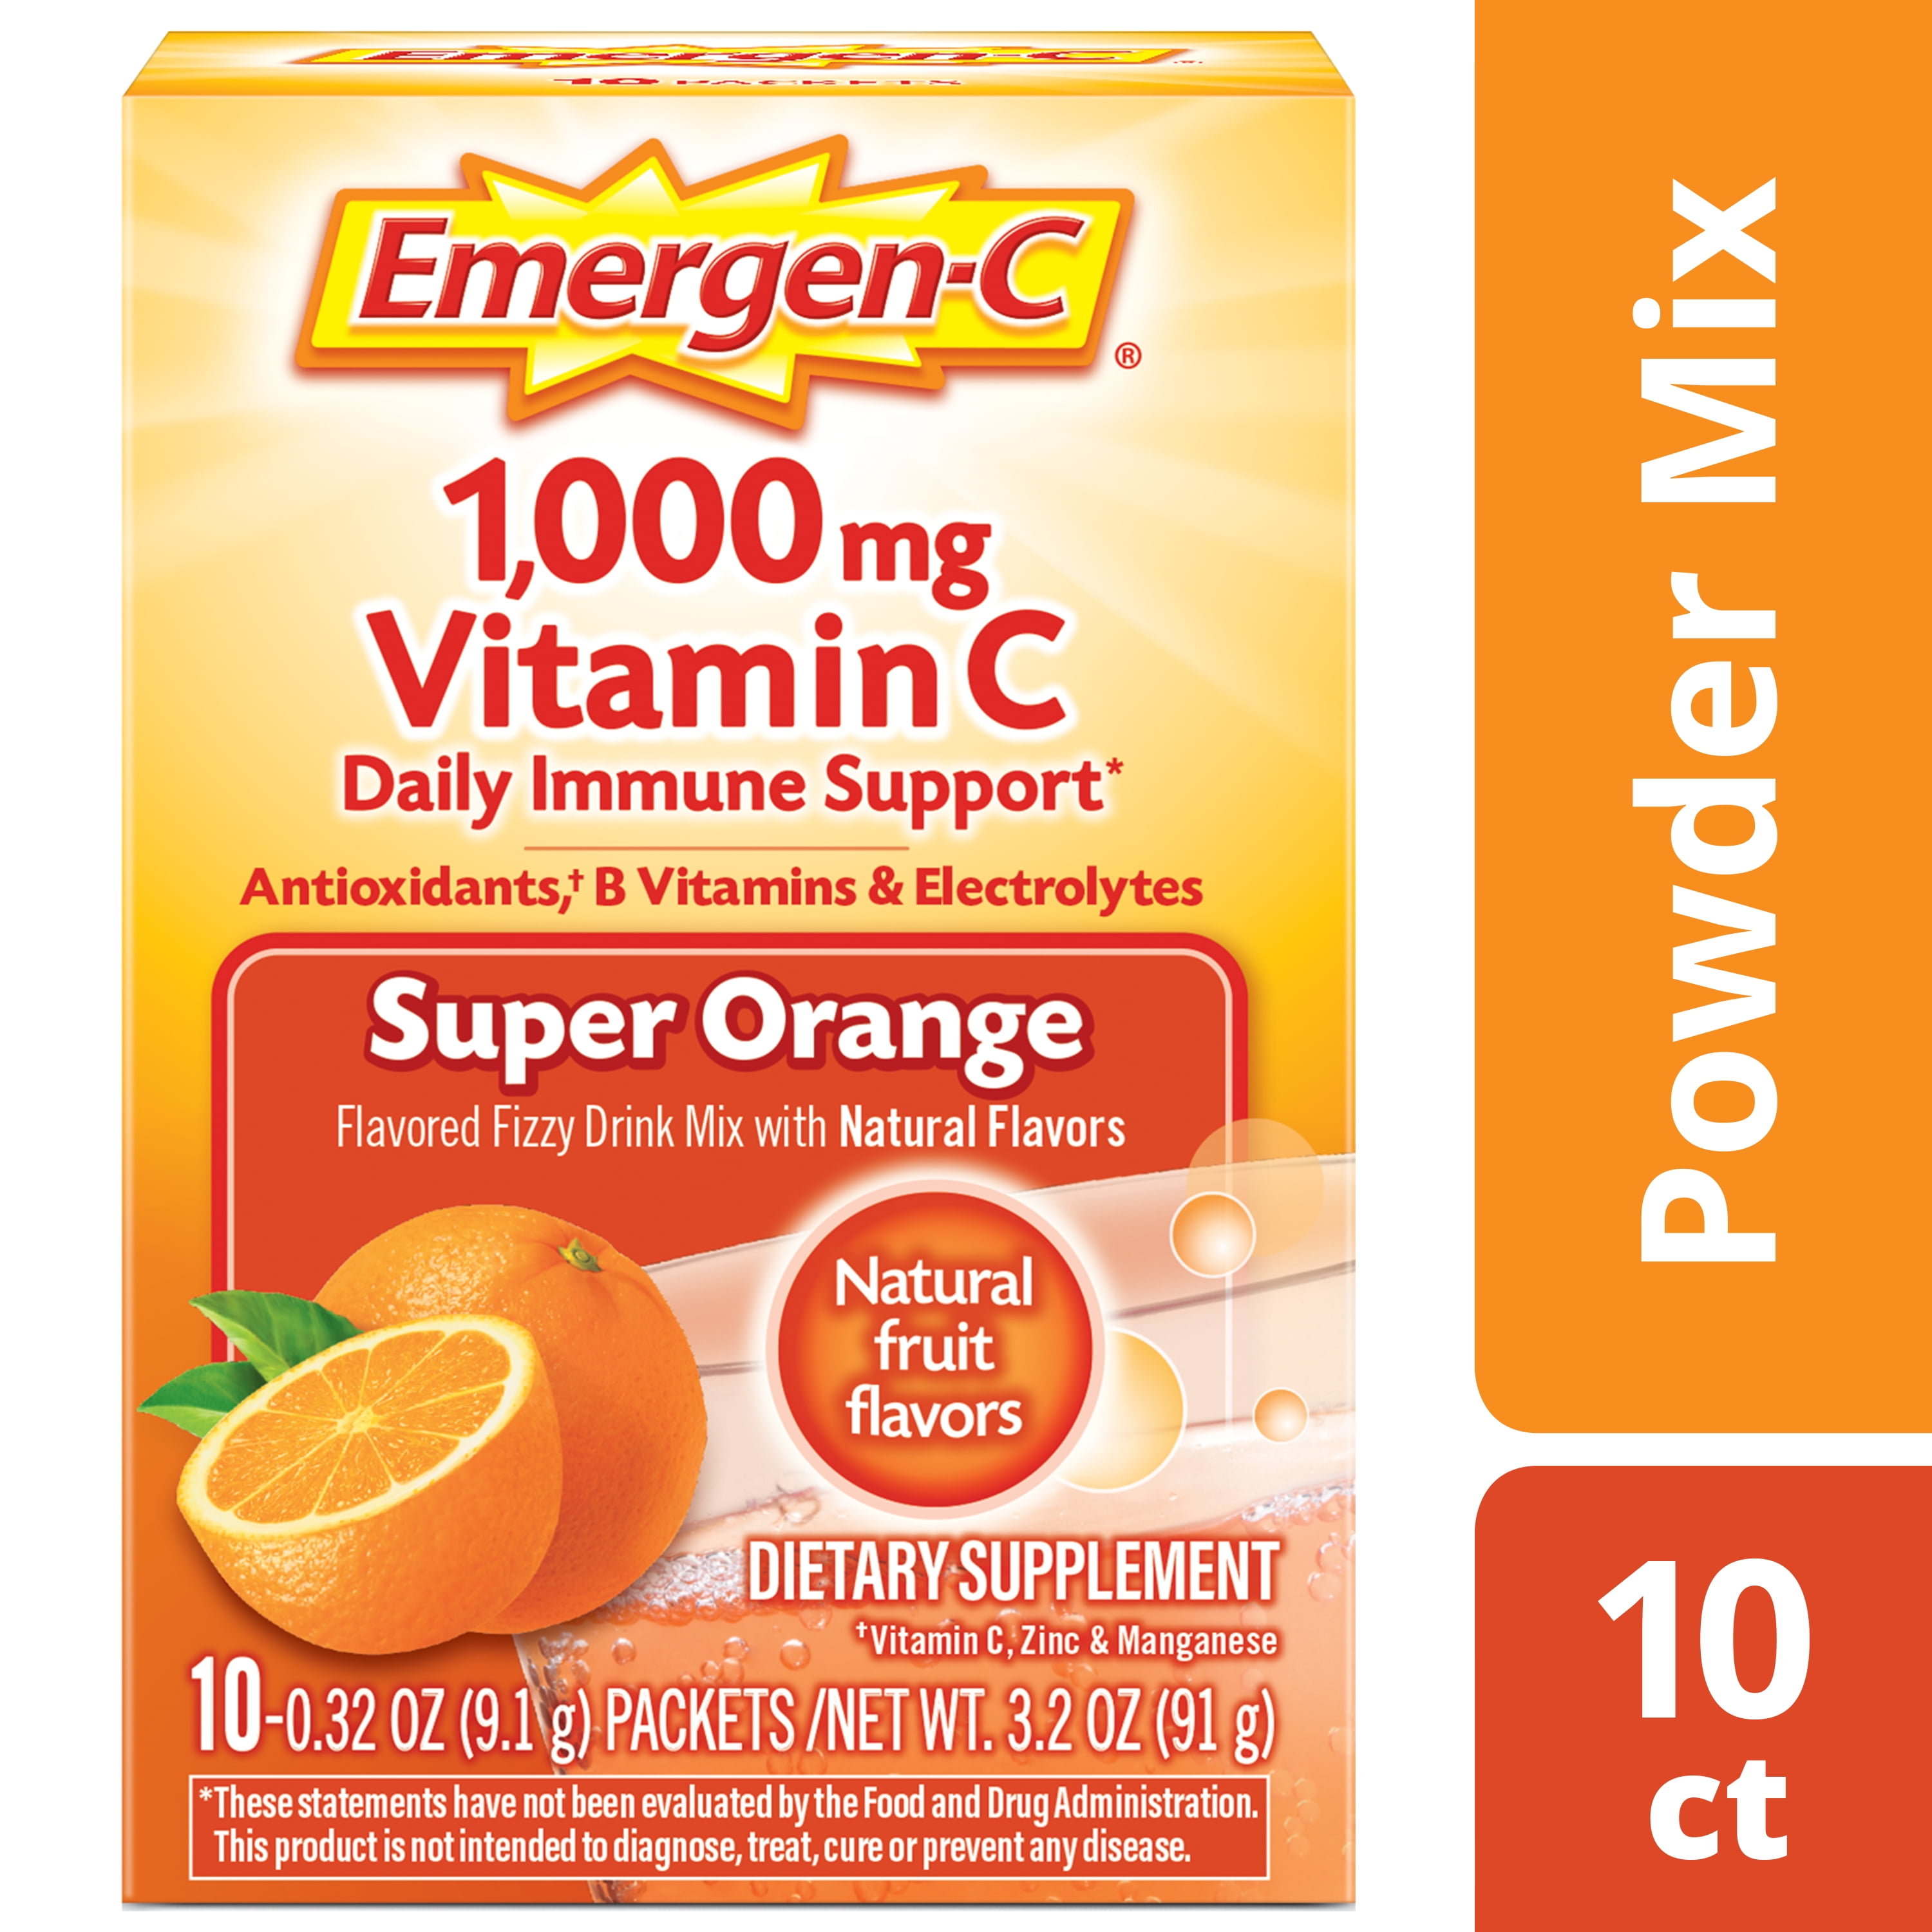 Emergen-C 1000mg Vitamin C Powder, with Antioxidants, B Vitamins and Electrolytes for Immune Support, Caffeine Free Vitamin C Supplement Fizzy Drink Mix, Super Orange Flavor - 10 Count -